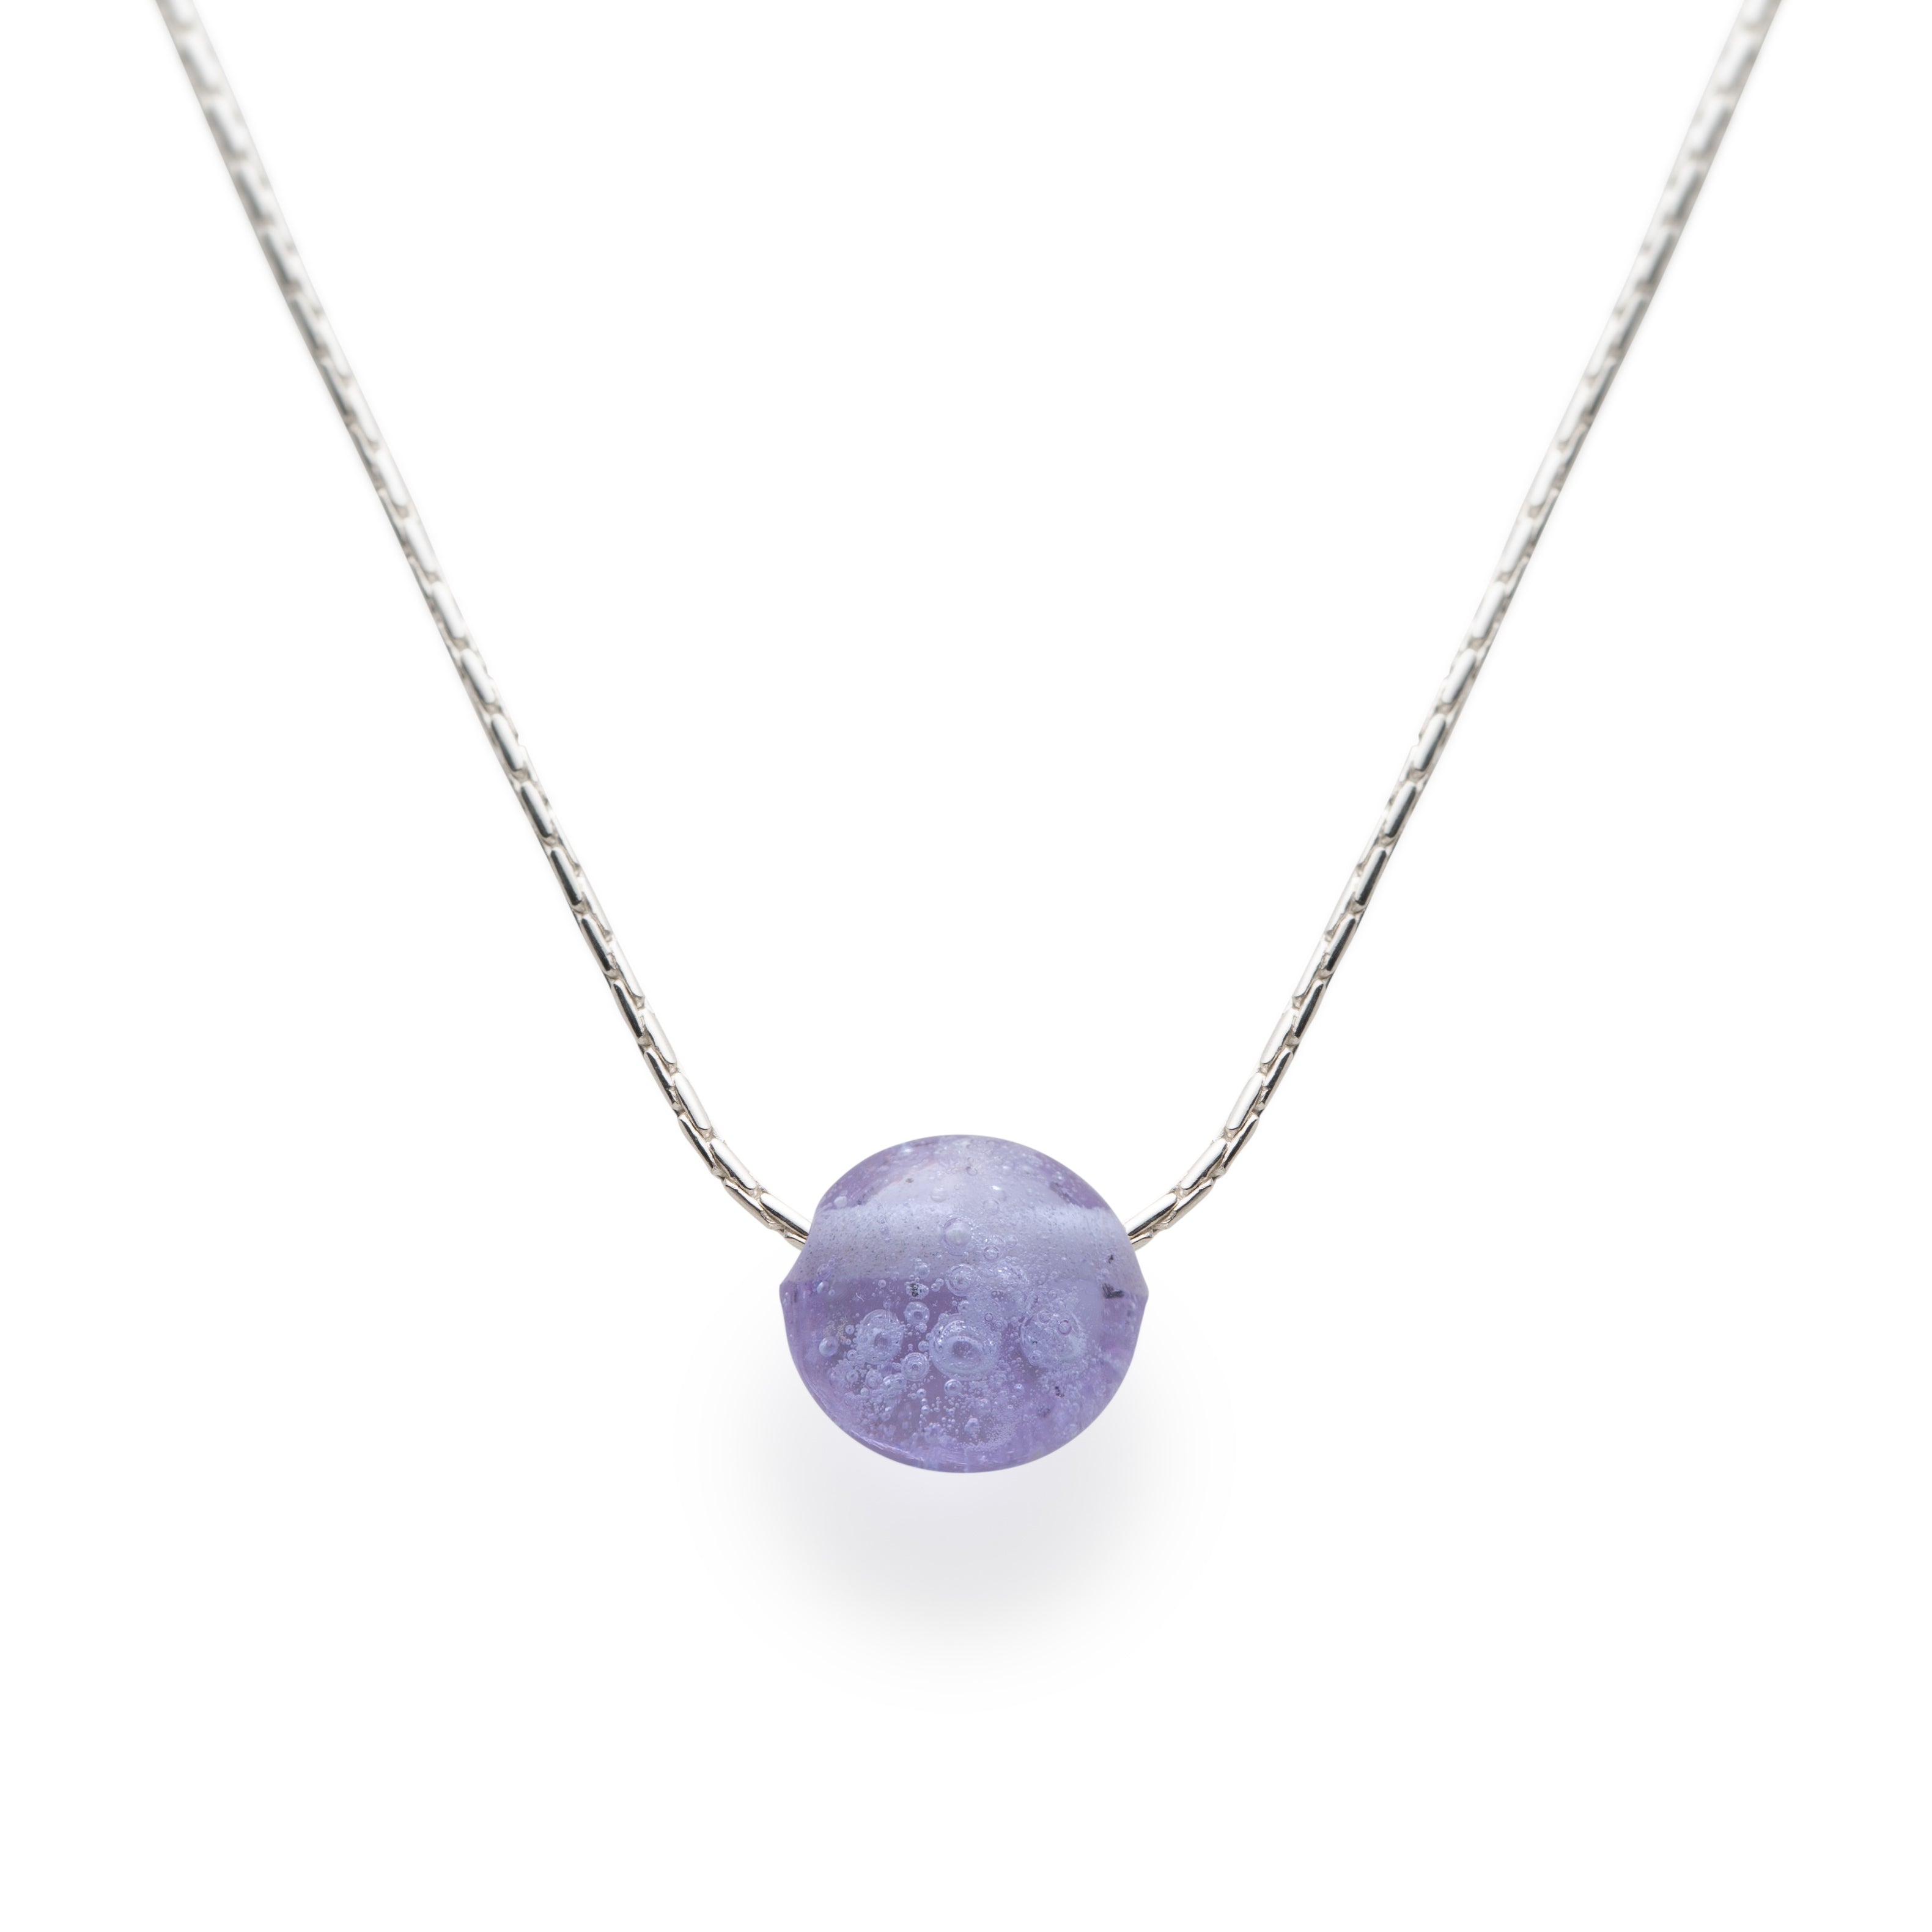 Silver Sand Pebble Necklace - Lavender